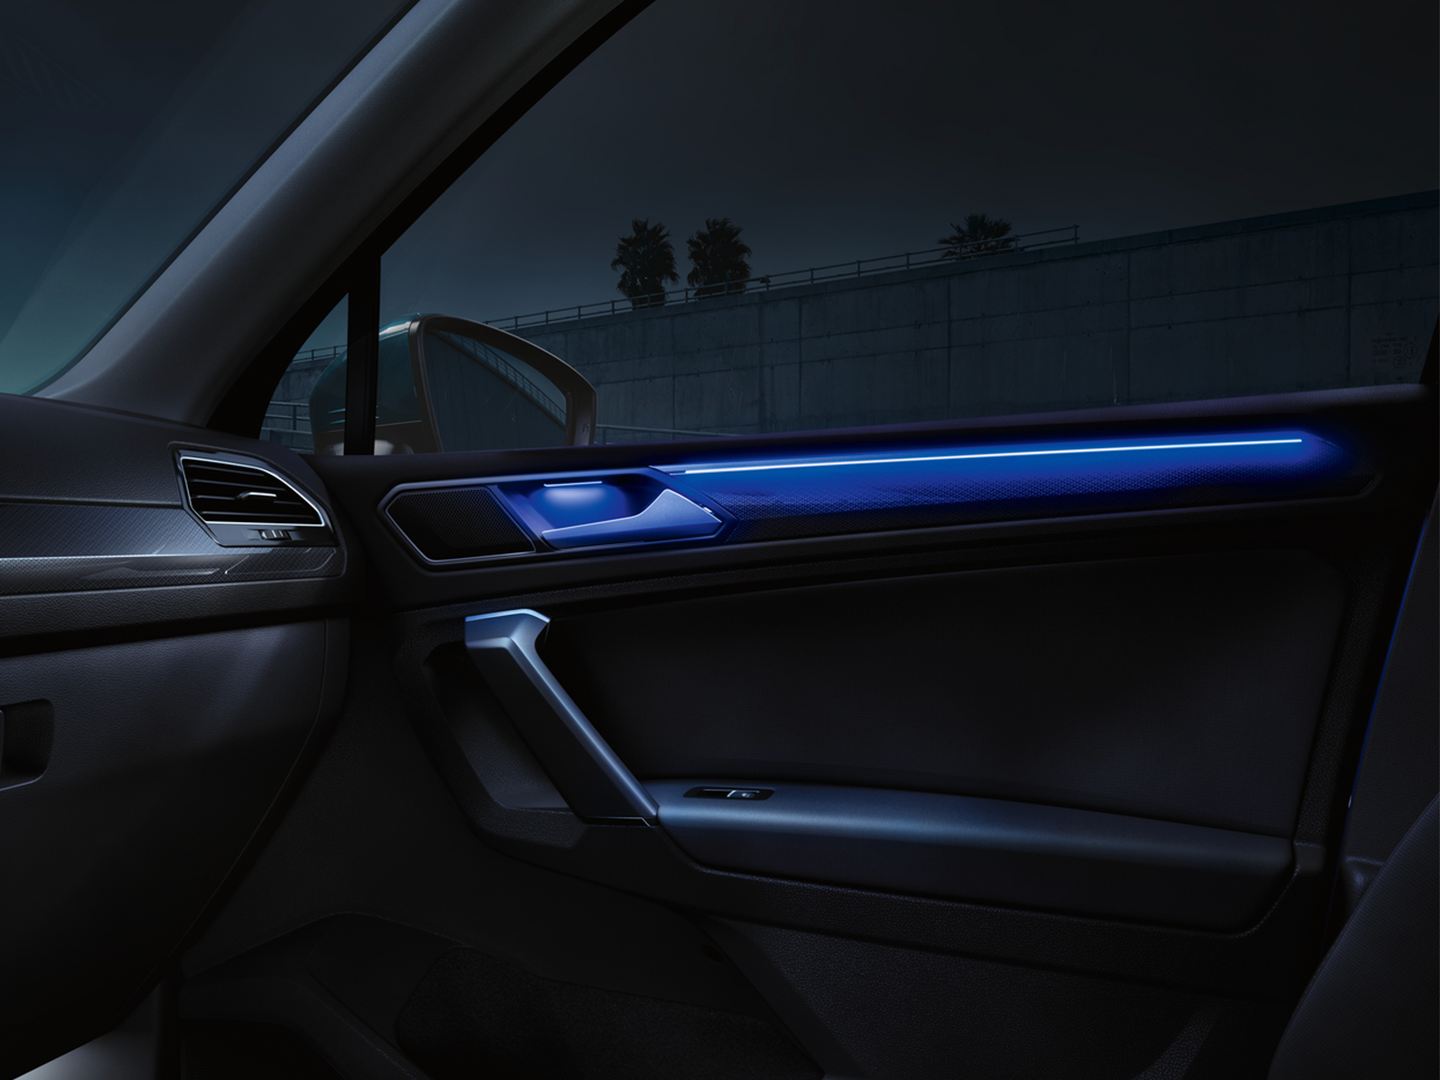 Tiguan MK2 Co-pilot dashboard ambient light, multi-color ambient light —  Vagpartsgo